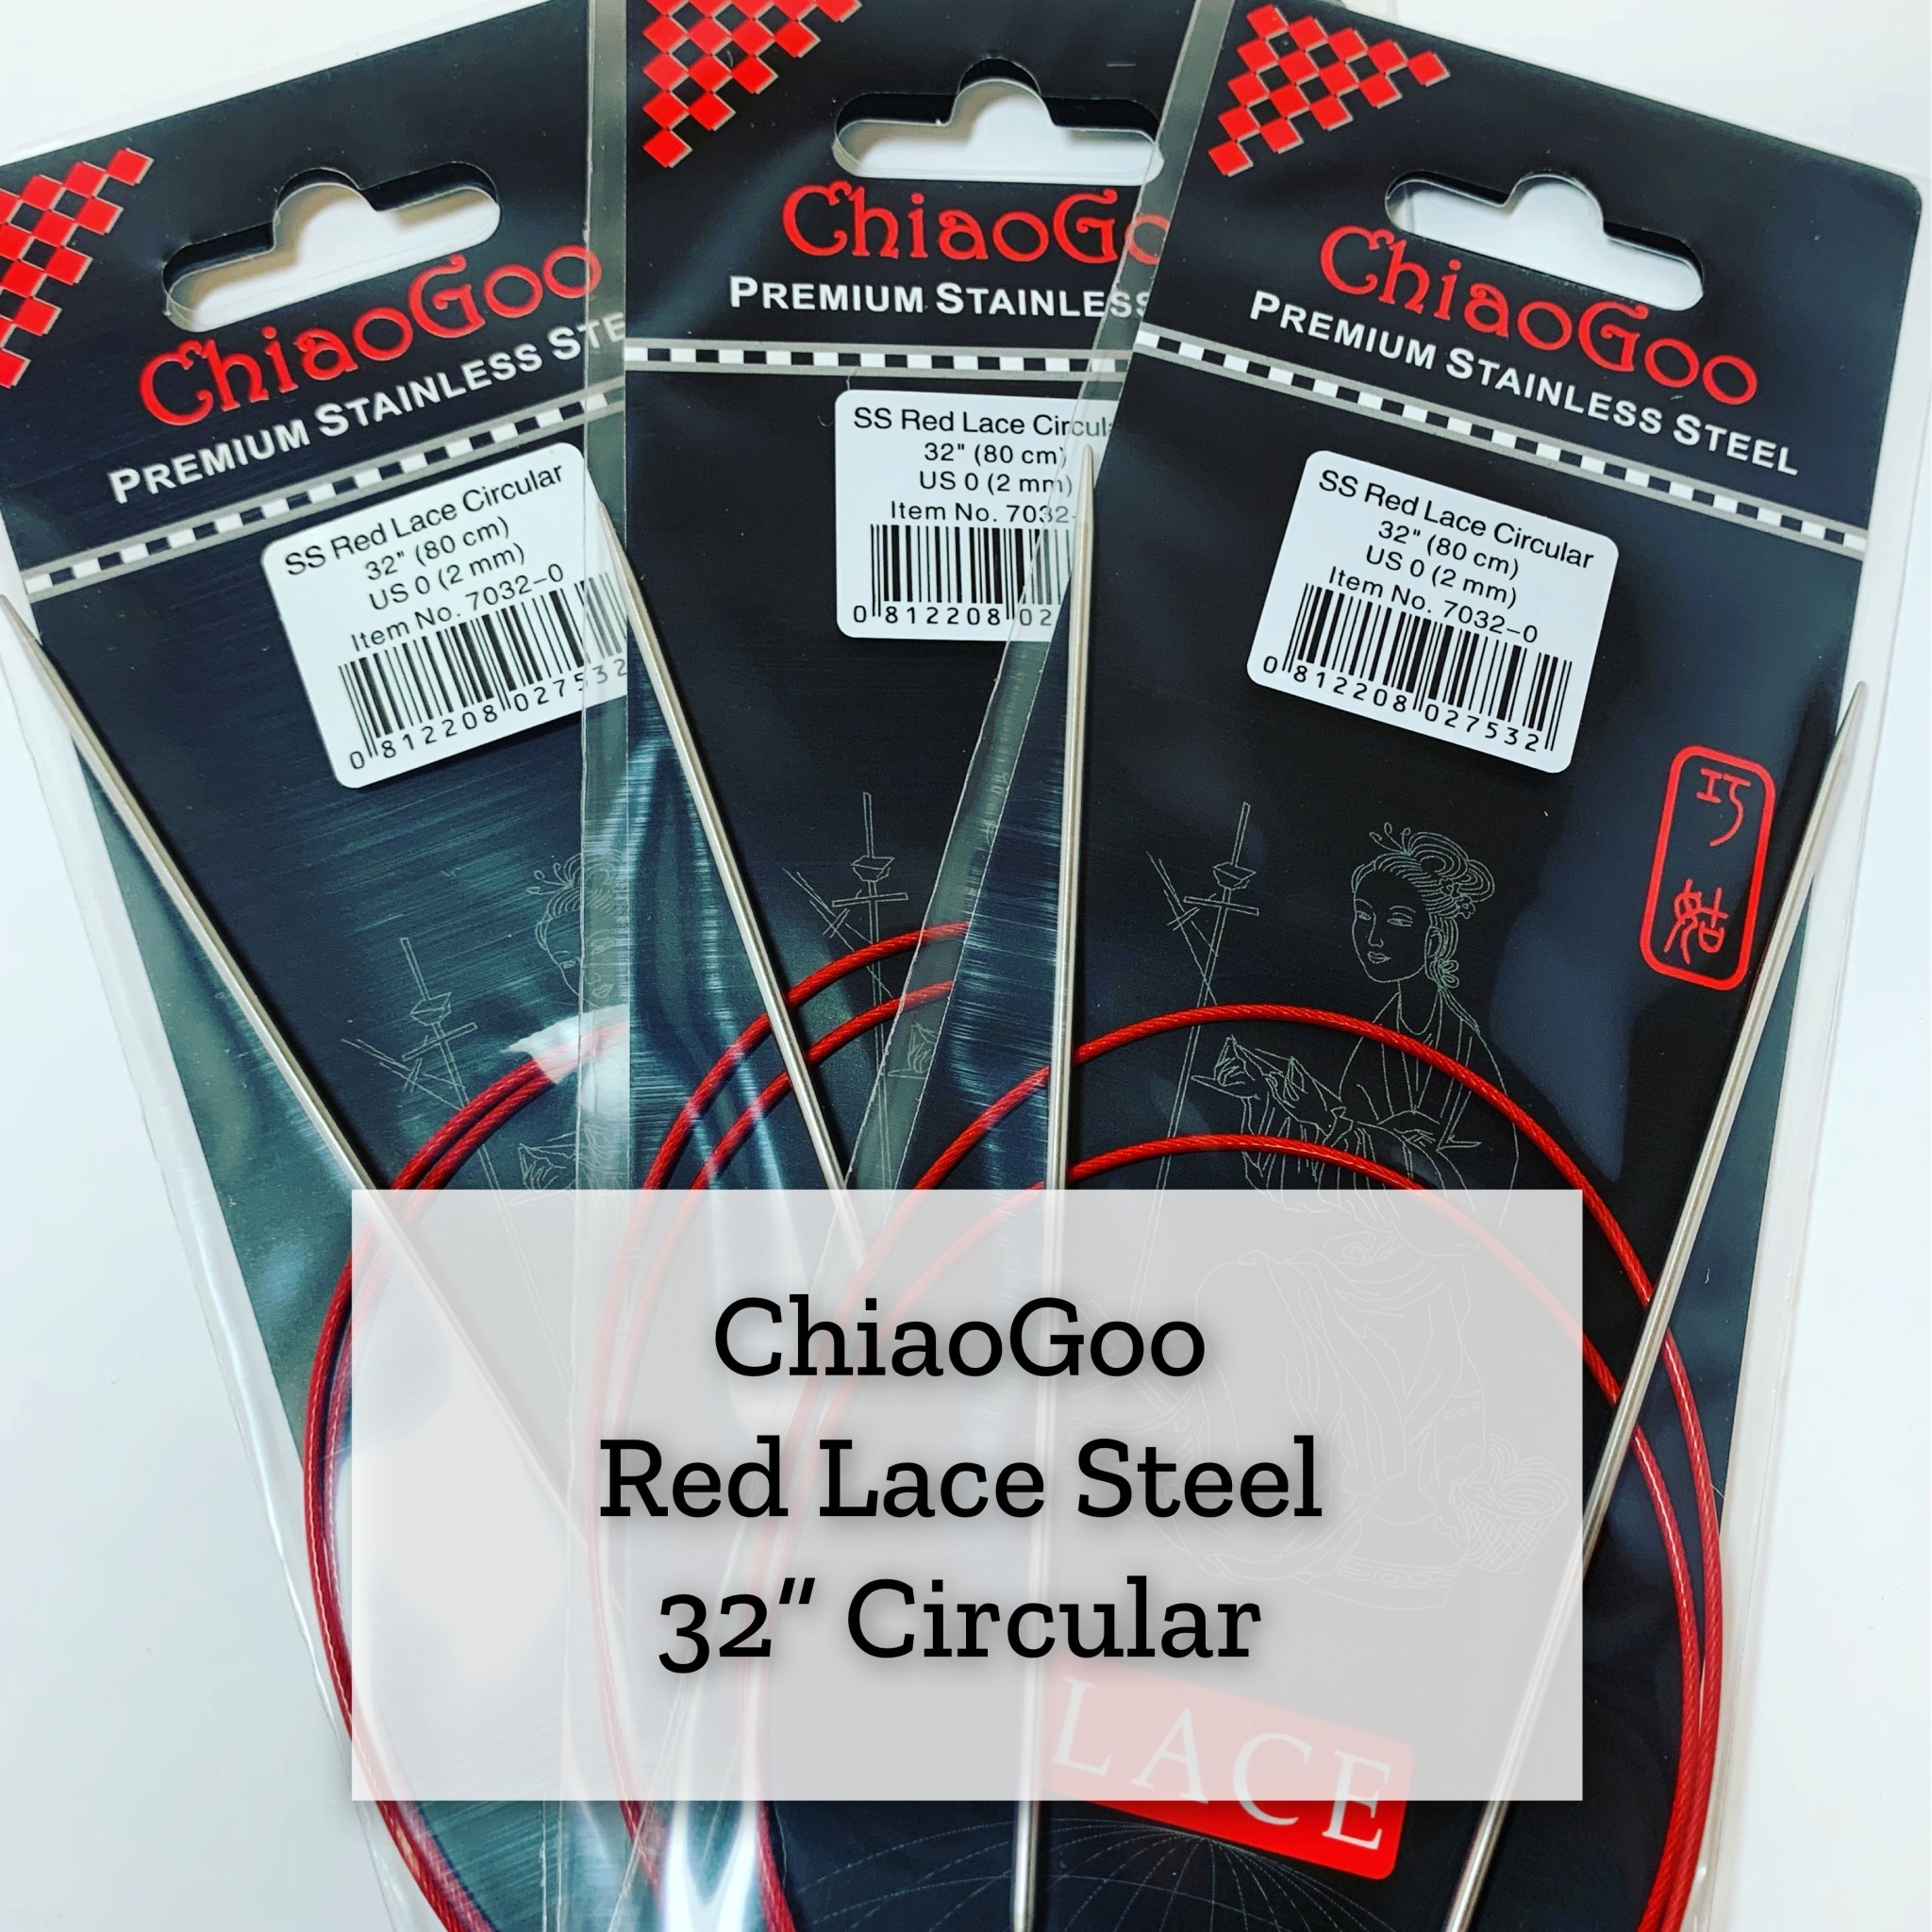 ChiaoGoo Red Lace Steel - 32" 2.5 mm